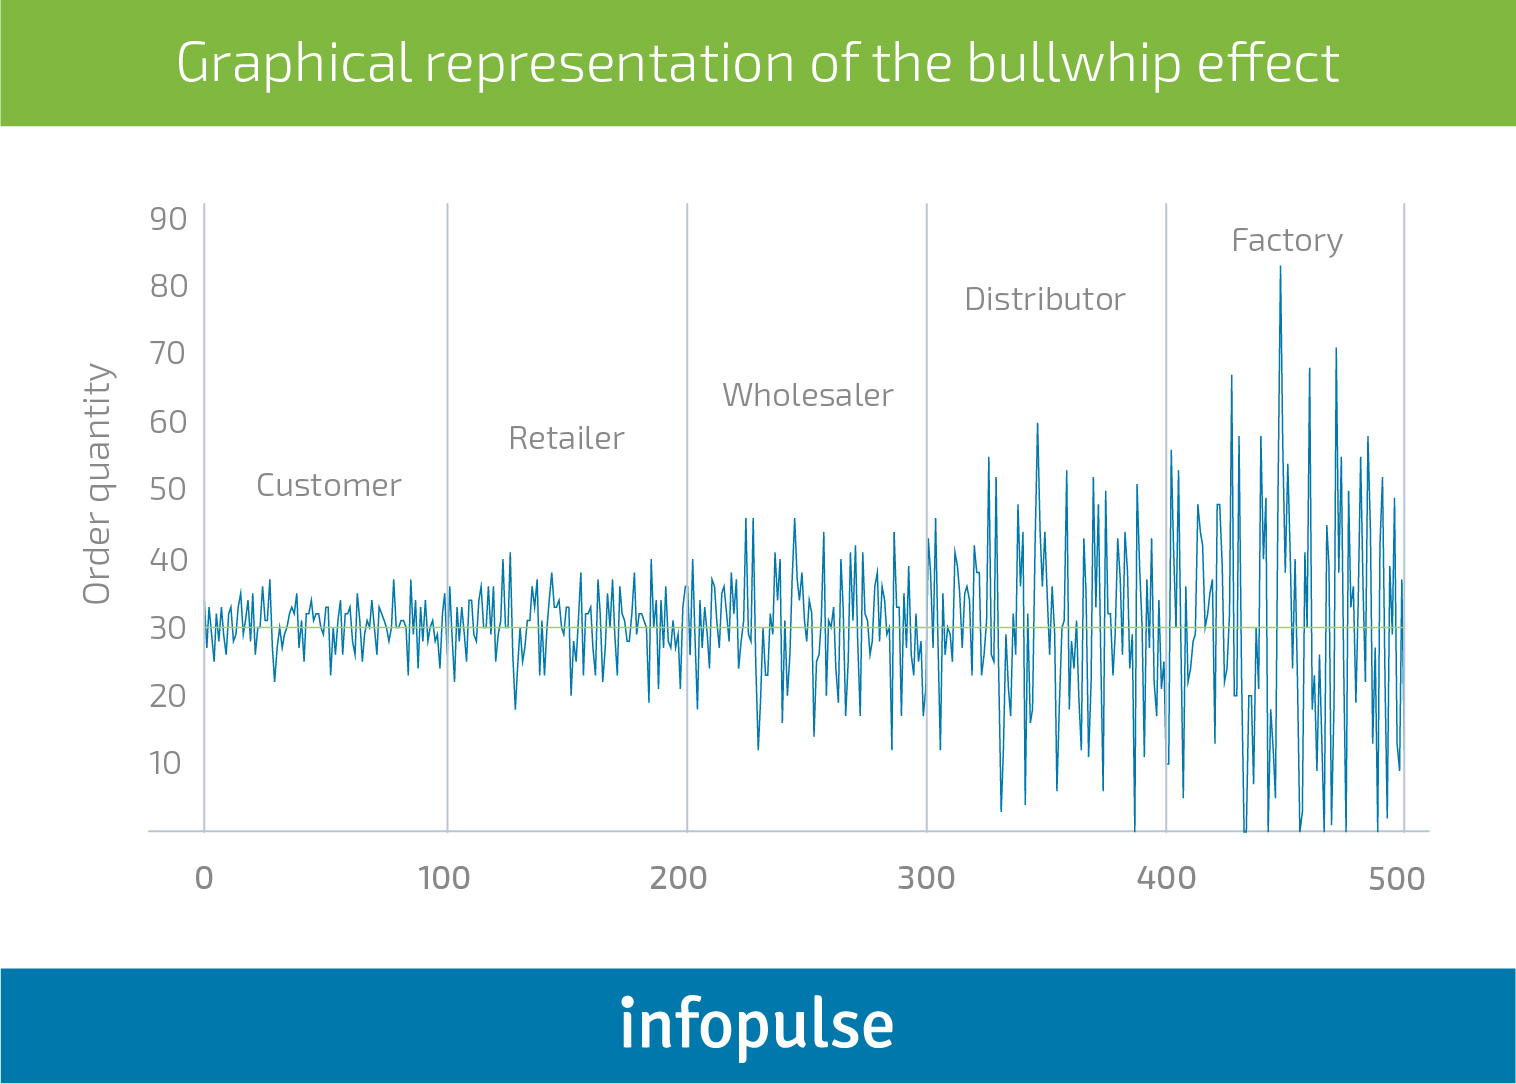 https://www.infopulse.com/files/images/graphical-representation-of-the-bullwhip-effect.jpg